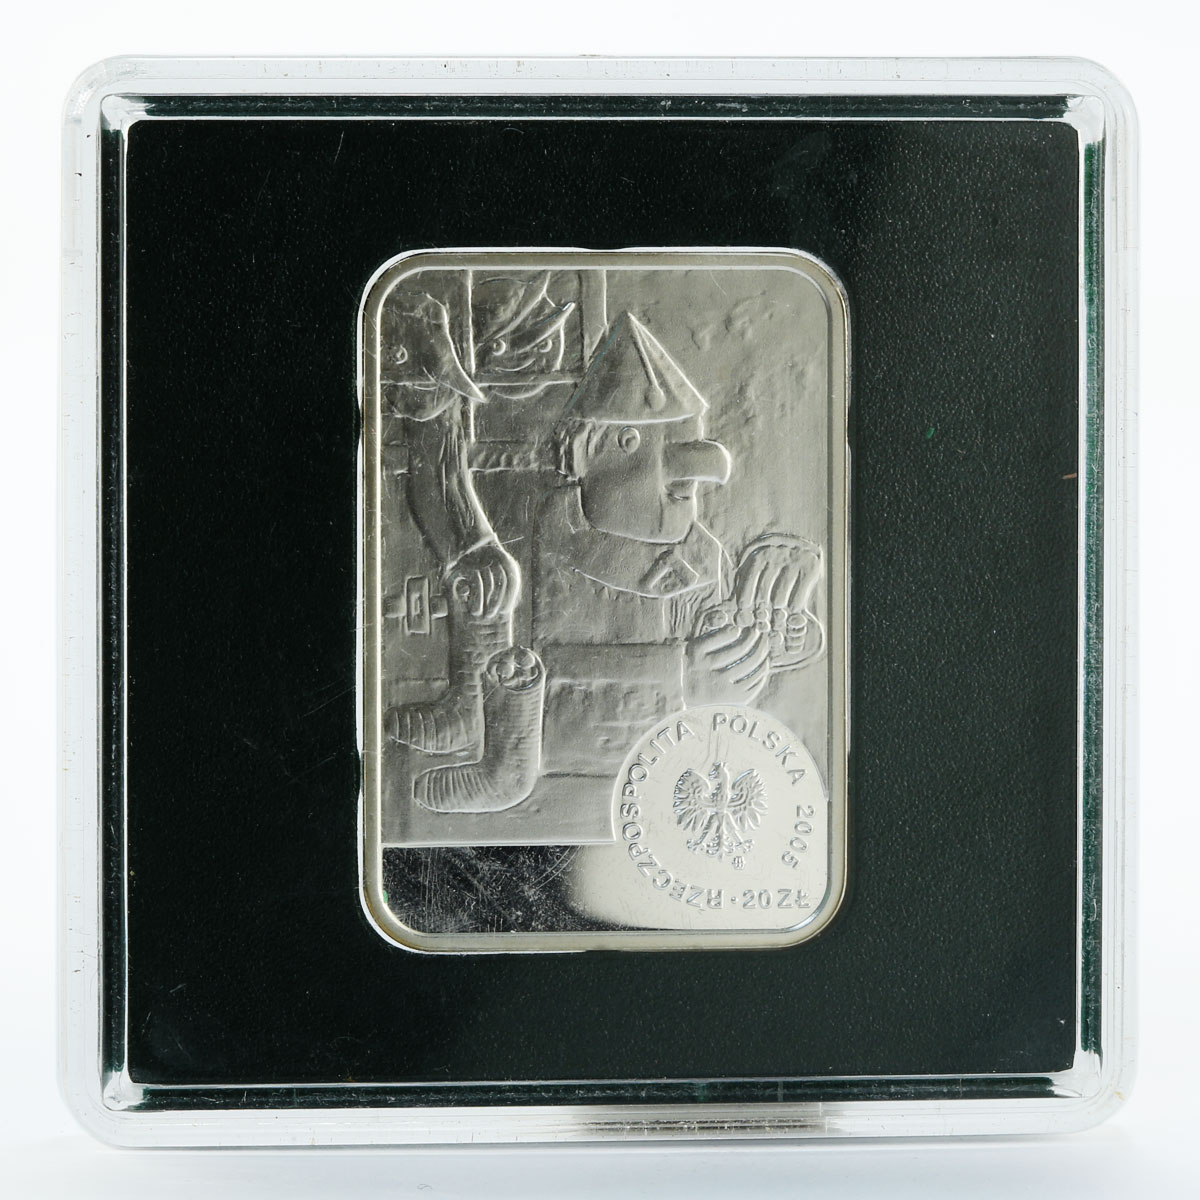 Poland 20 zlotych Tadeusz Makowski painters silver coin 2005